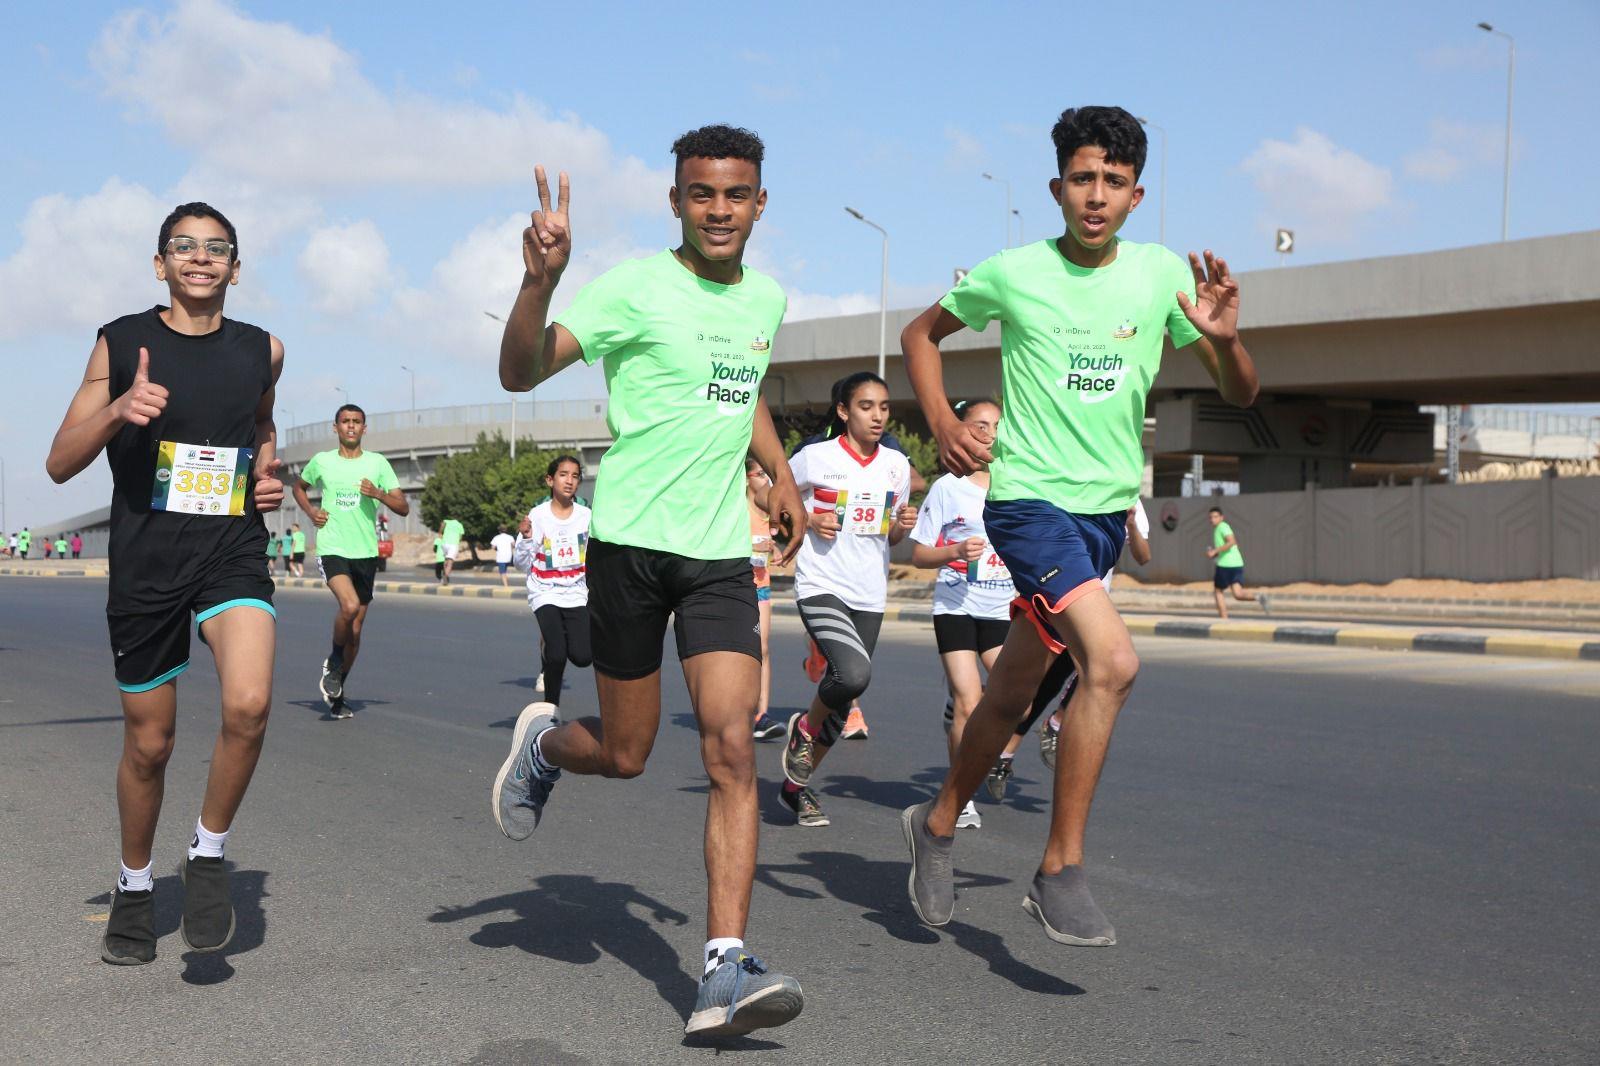 inDrive تشارك في ماراثون نهر النيل المصري الكبير من خلال سباق 5 كيلومترات للشباب 